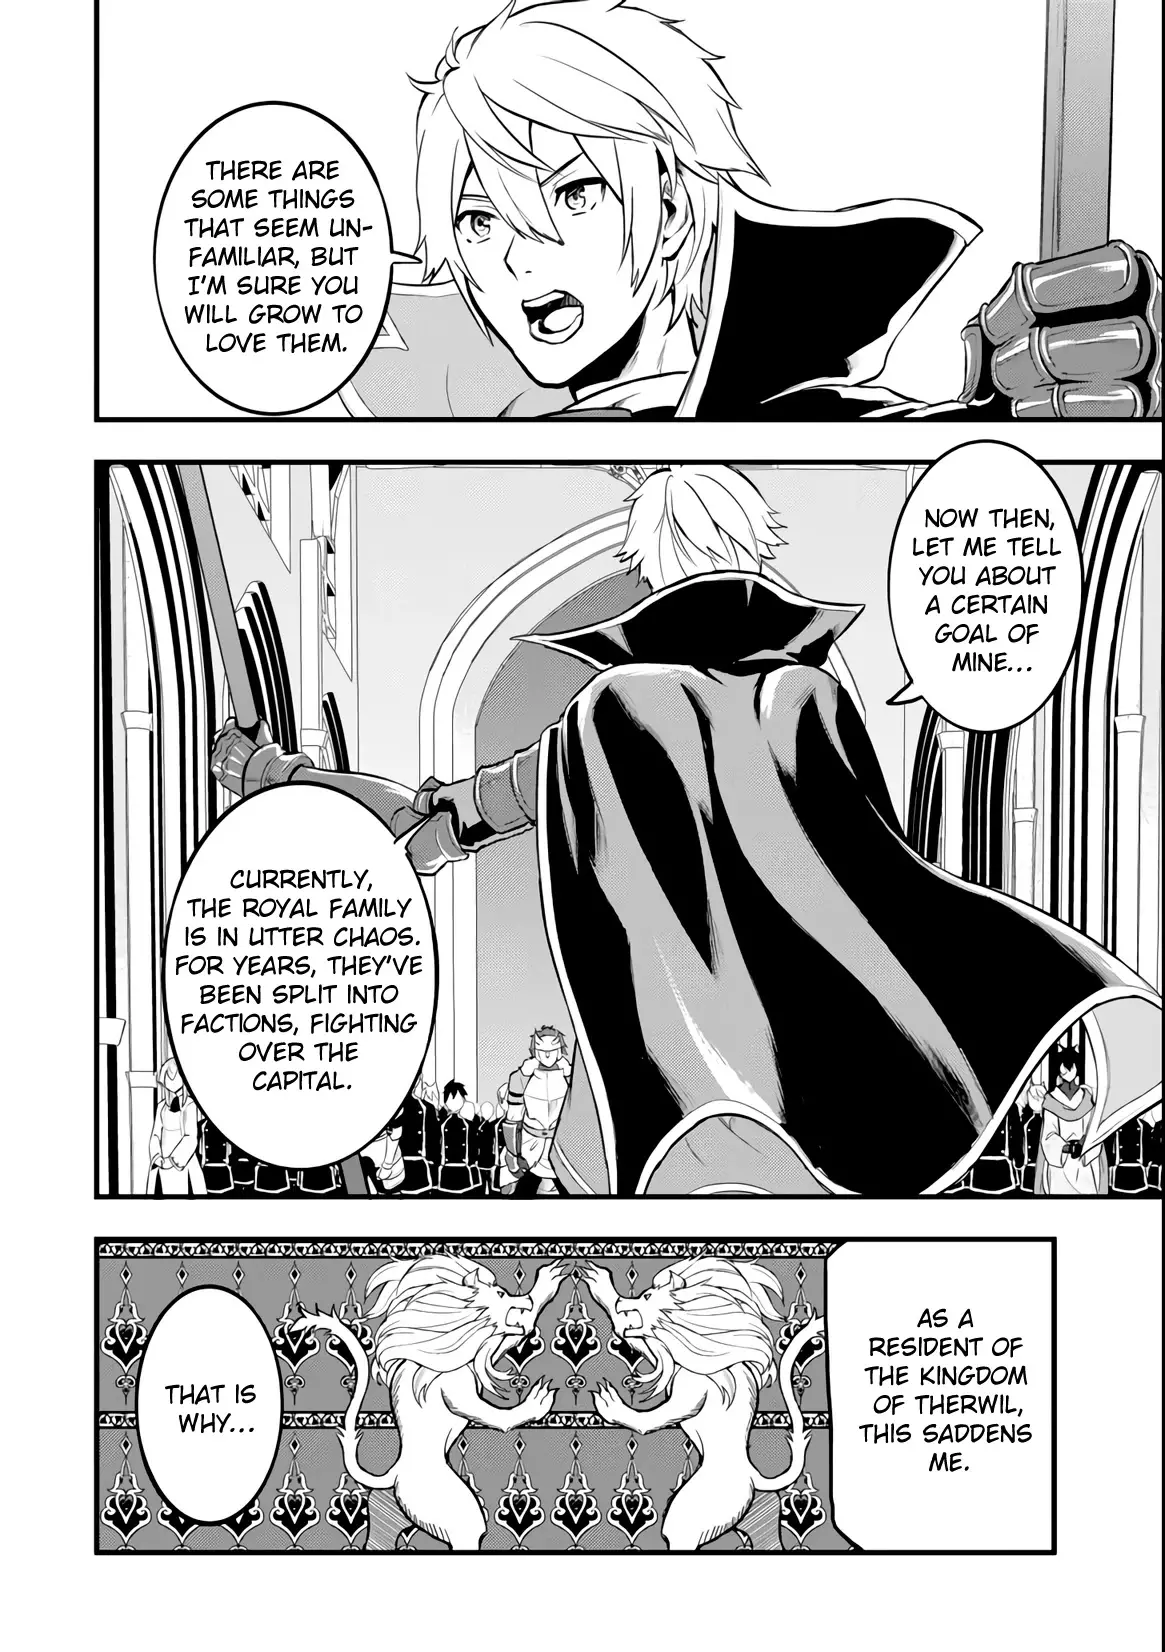 Mysterious Job Called Oda Nobunaga - 12 page 8-80b51c43